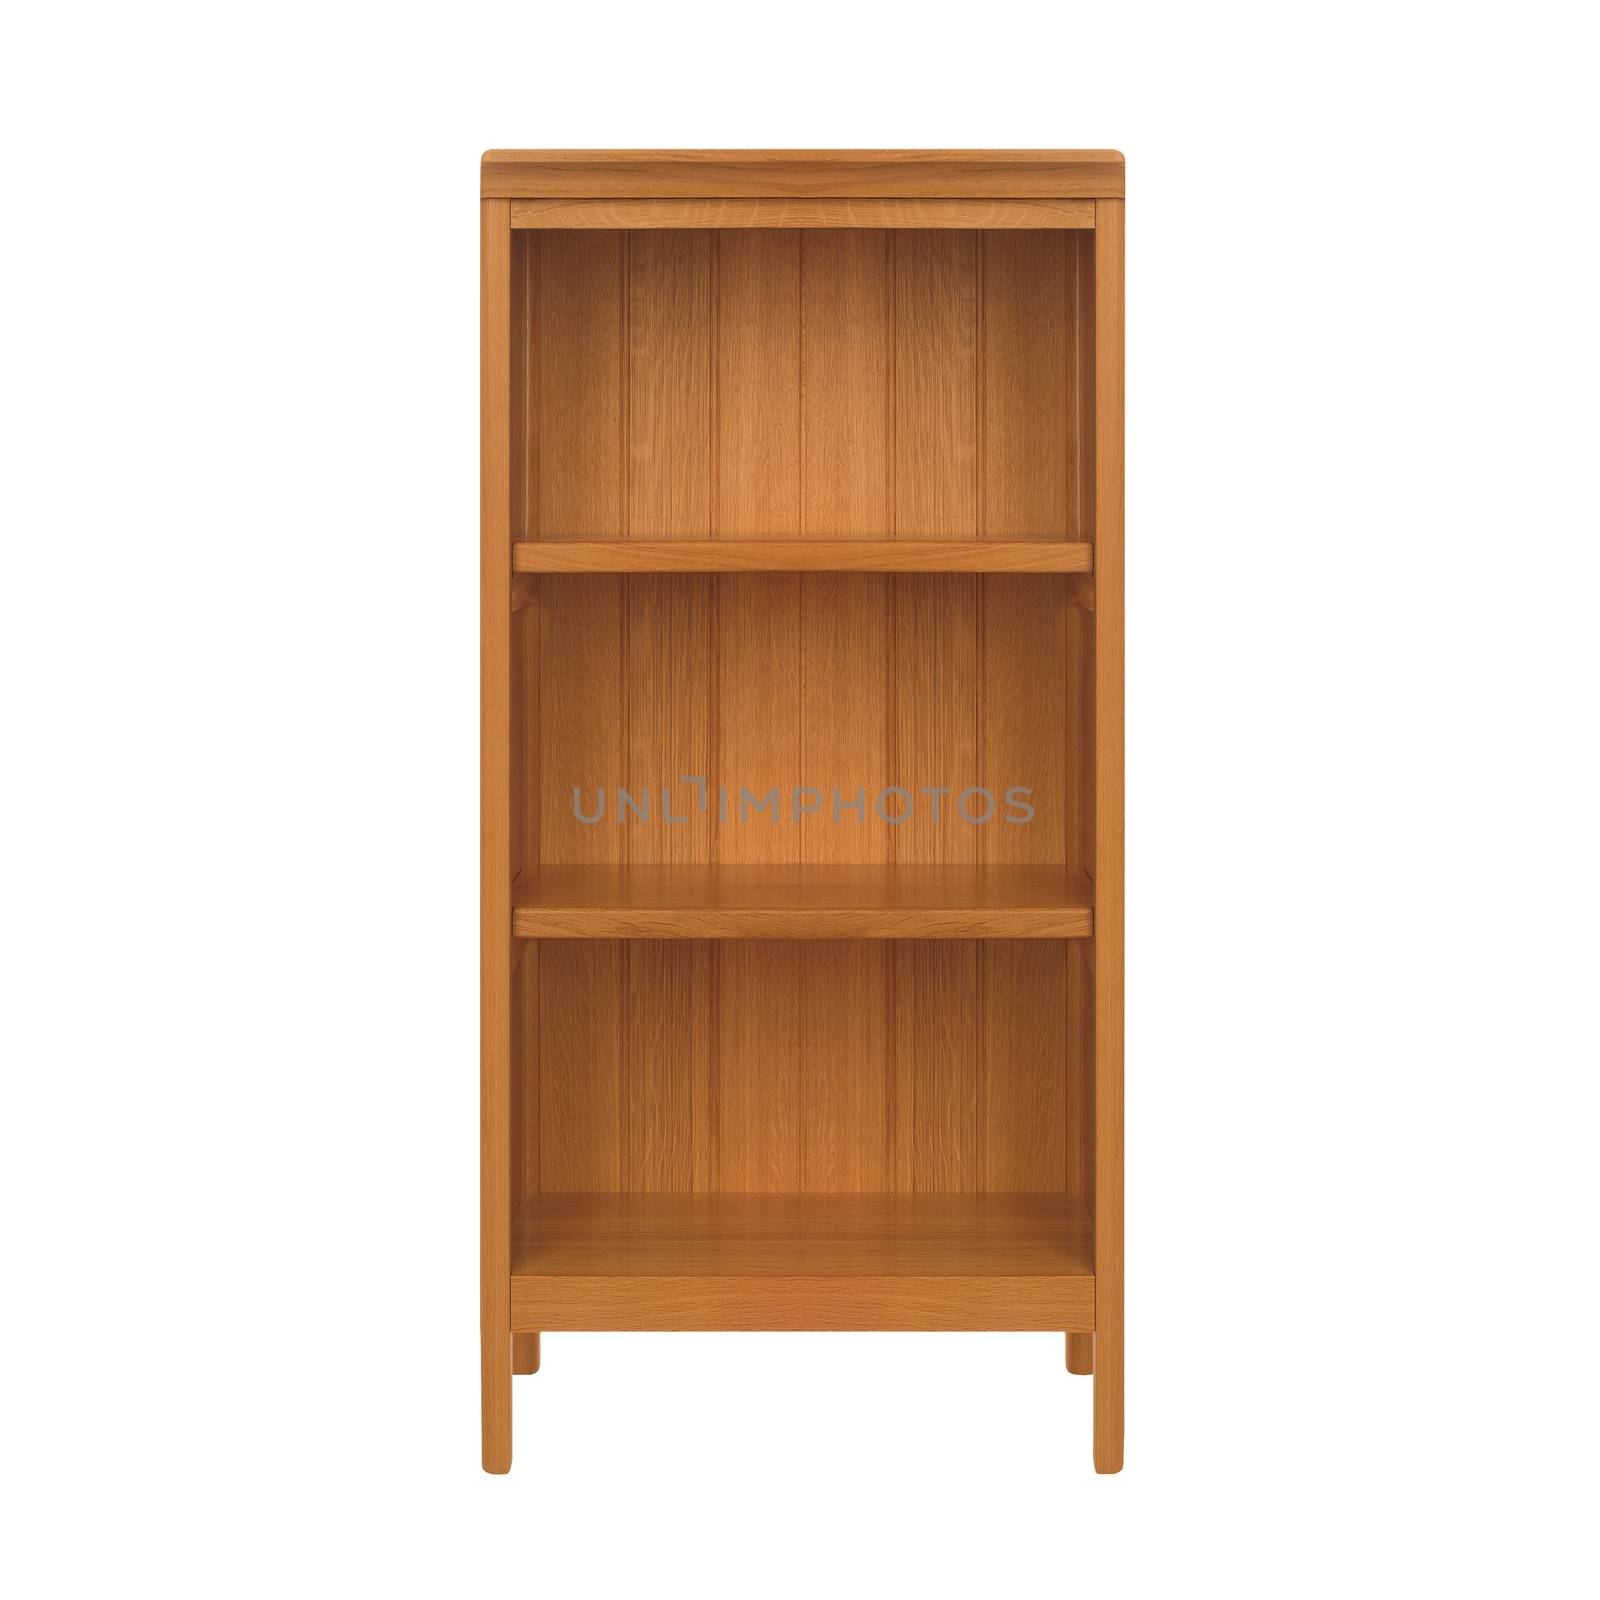 Empty bookshelf isolated on a white background closeup